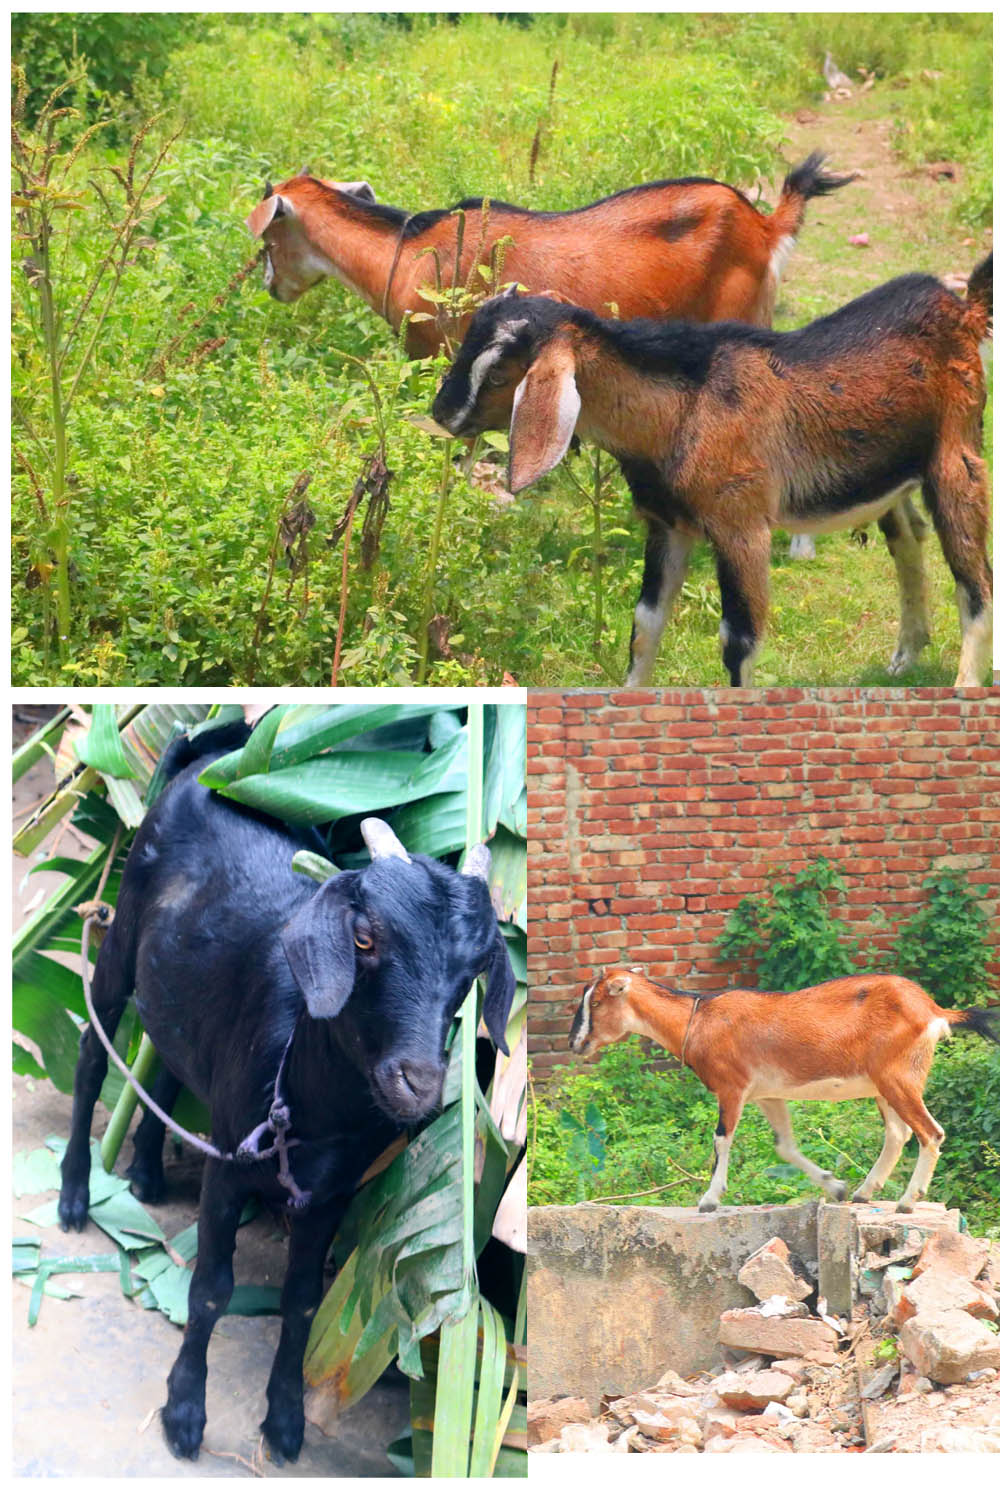 Goat Khasi photography in bangladesh pinterest preview image.